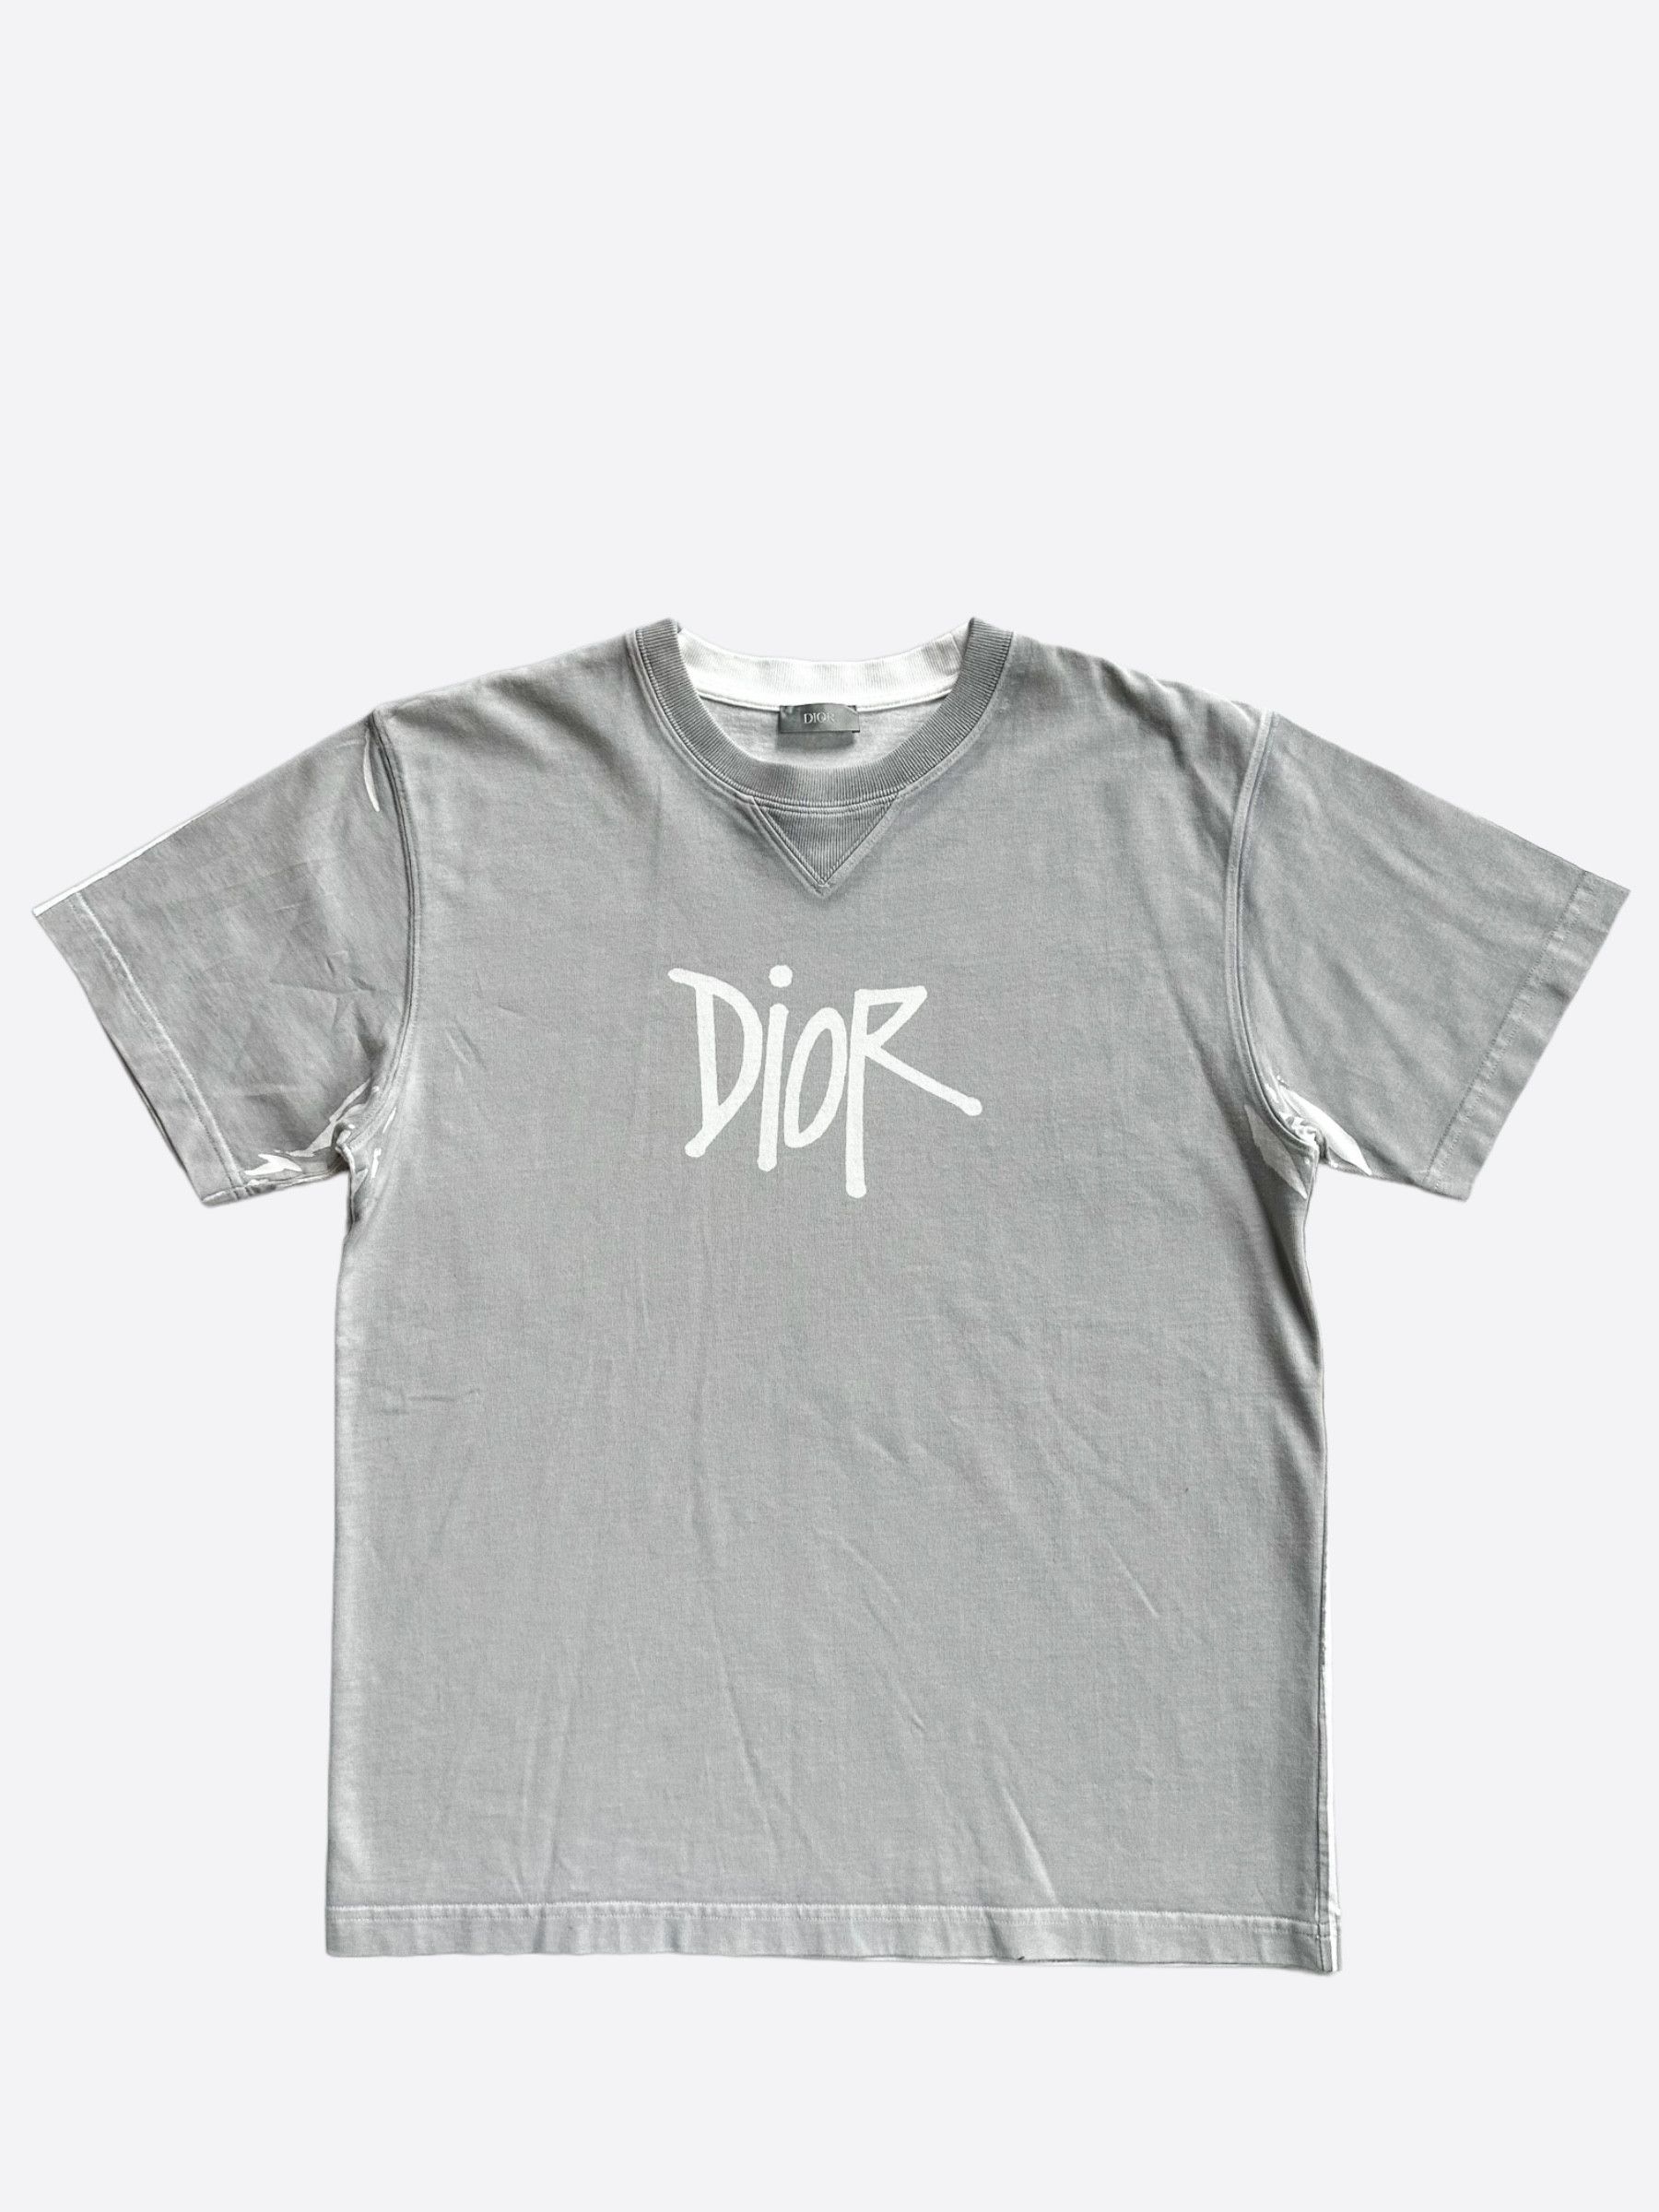 Dior Dior Stussy Grey & White Logo T-Shirt | Grailed